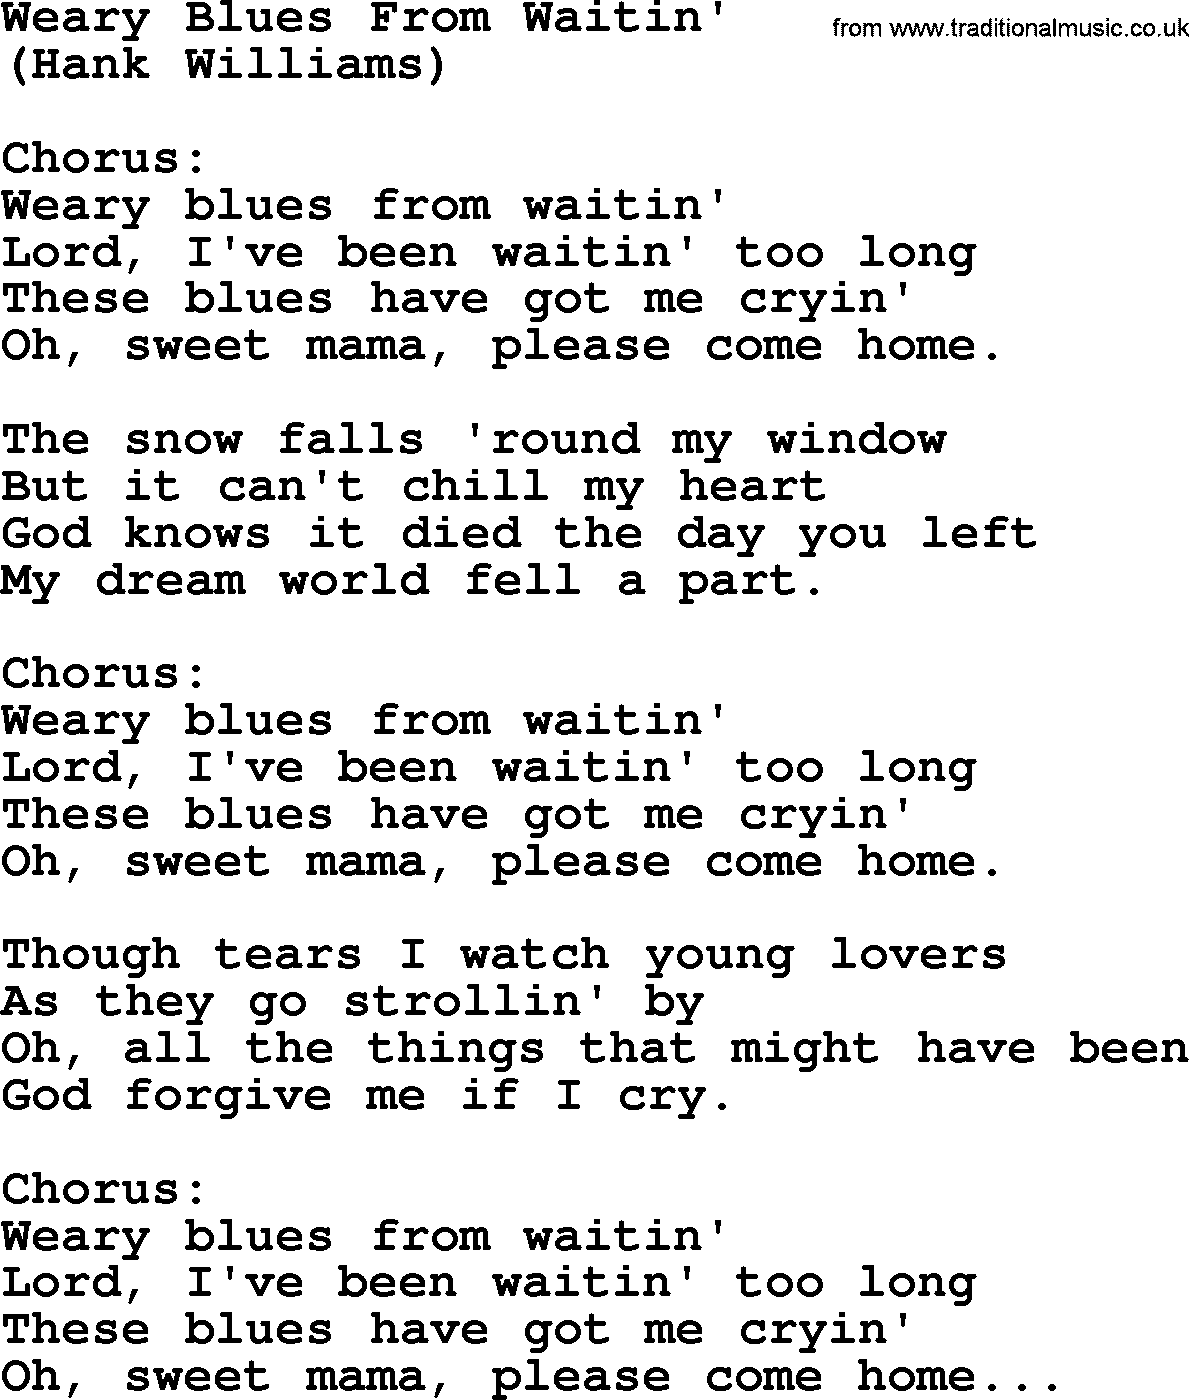 Hank Williams song Weary Blues From Waitin', lyrics